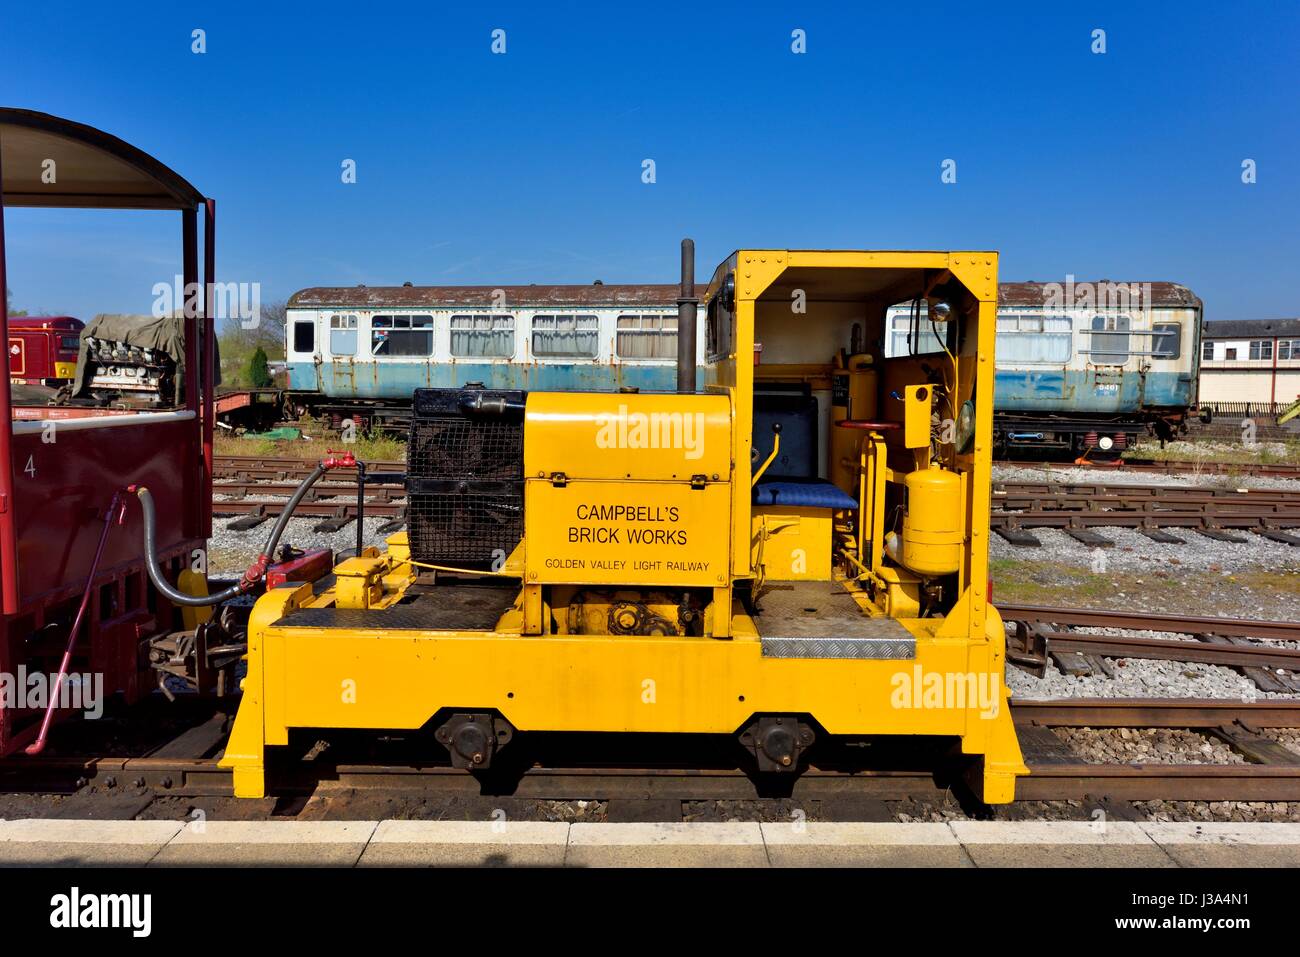 Golden valley light railway simplex diesel locomotive Stock Photo